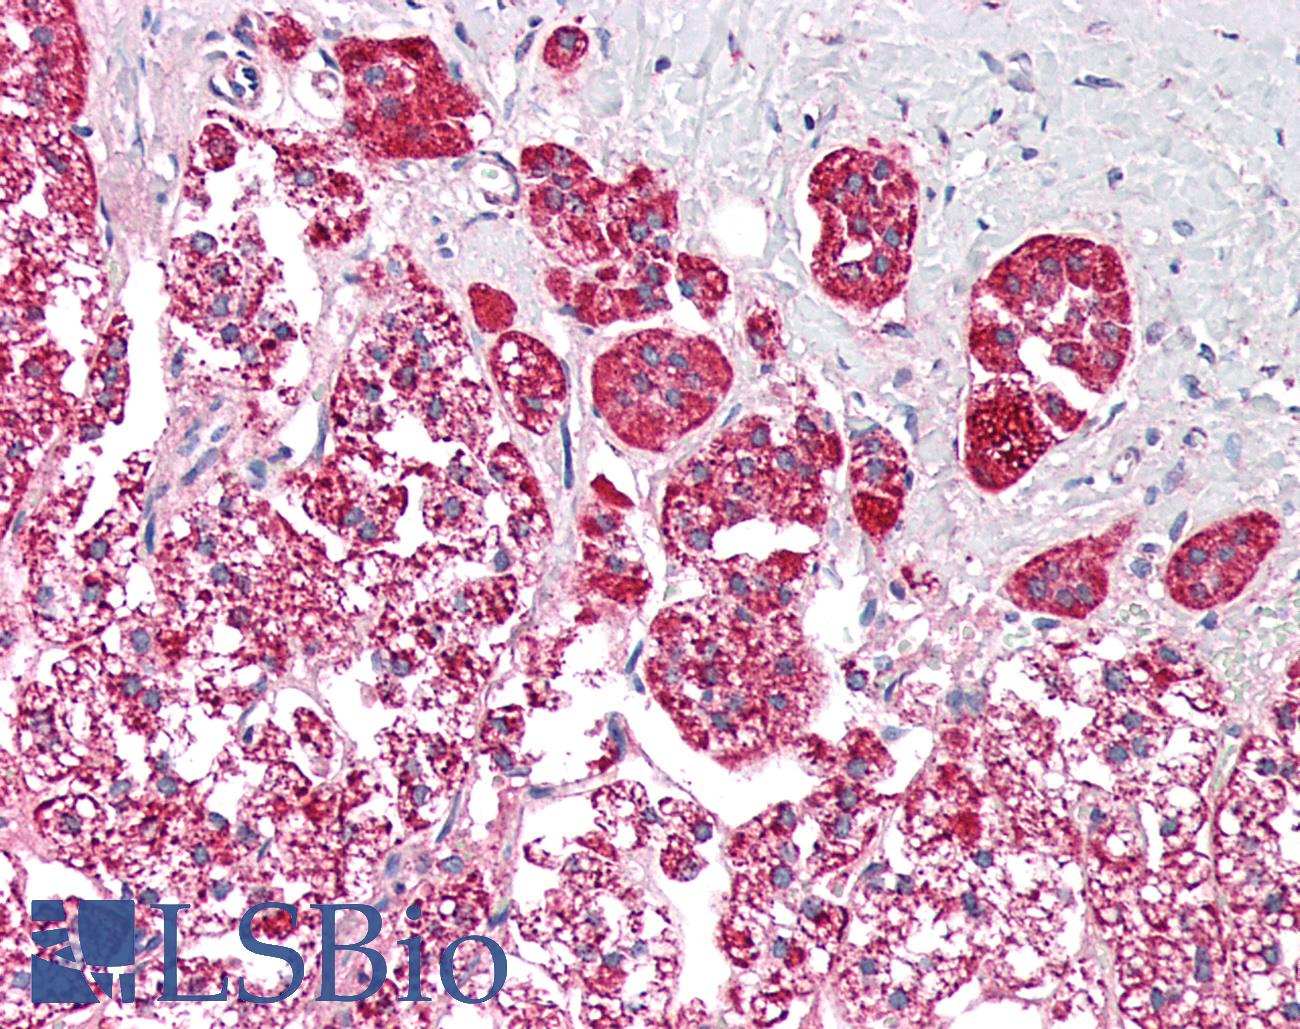 PCCB Antibody - Human Adrenal: Formalin-Fixed, Paraffin-Embedded (FFPE)